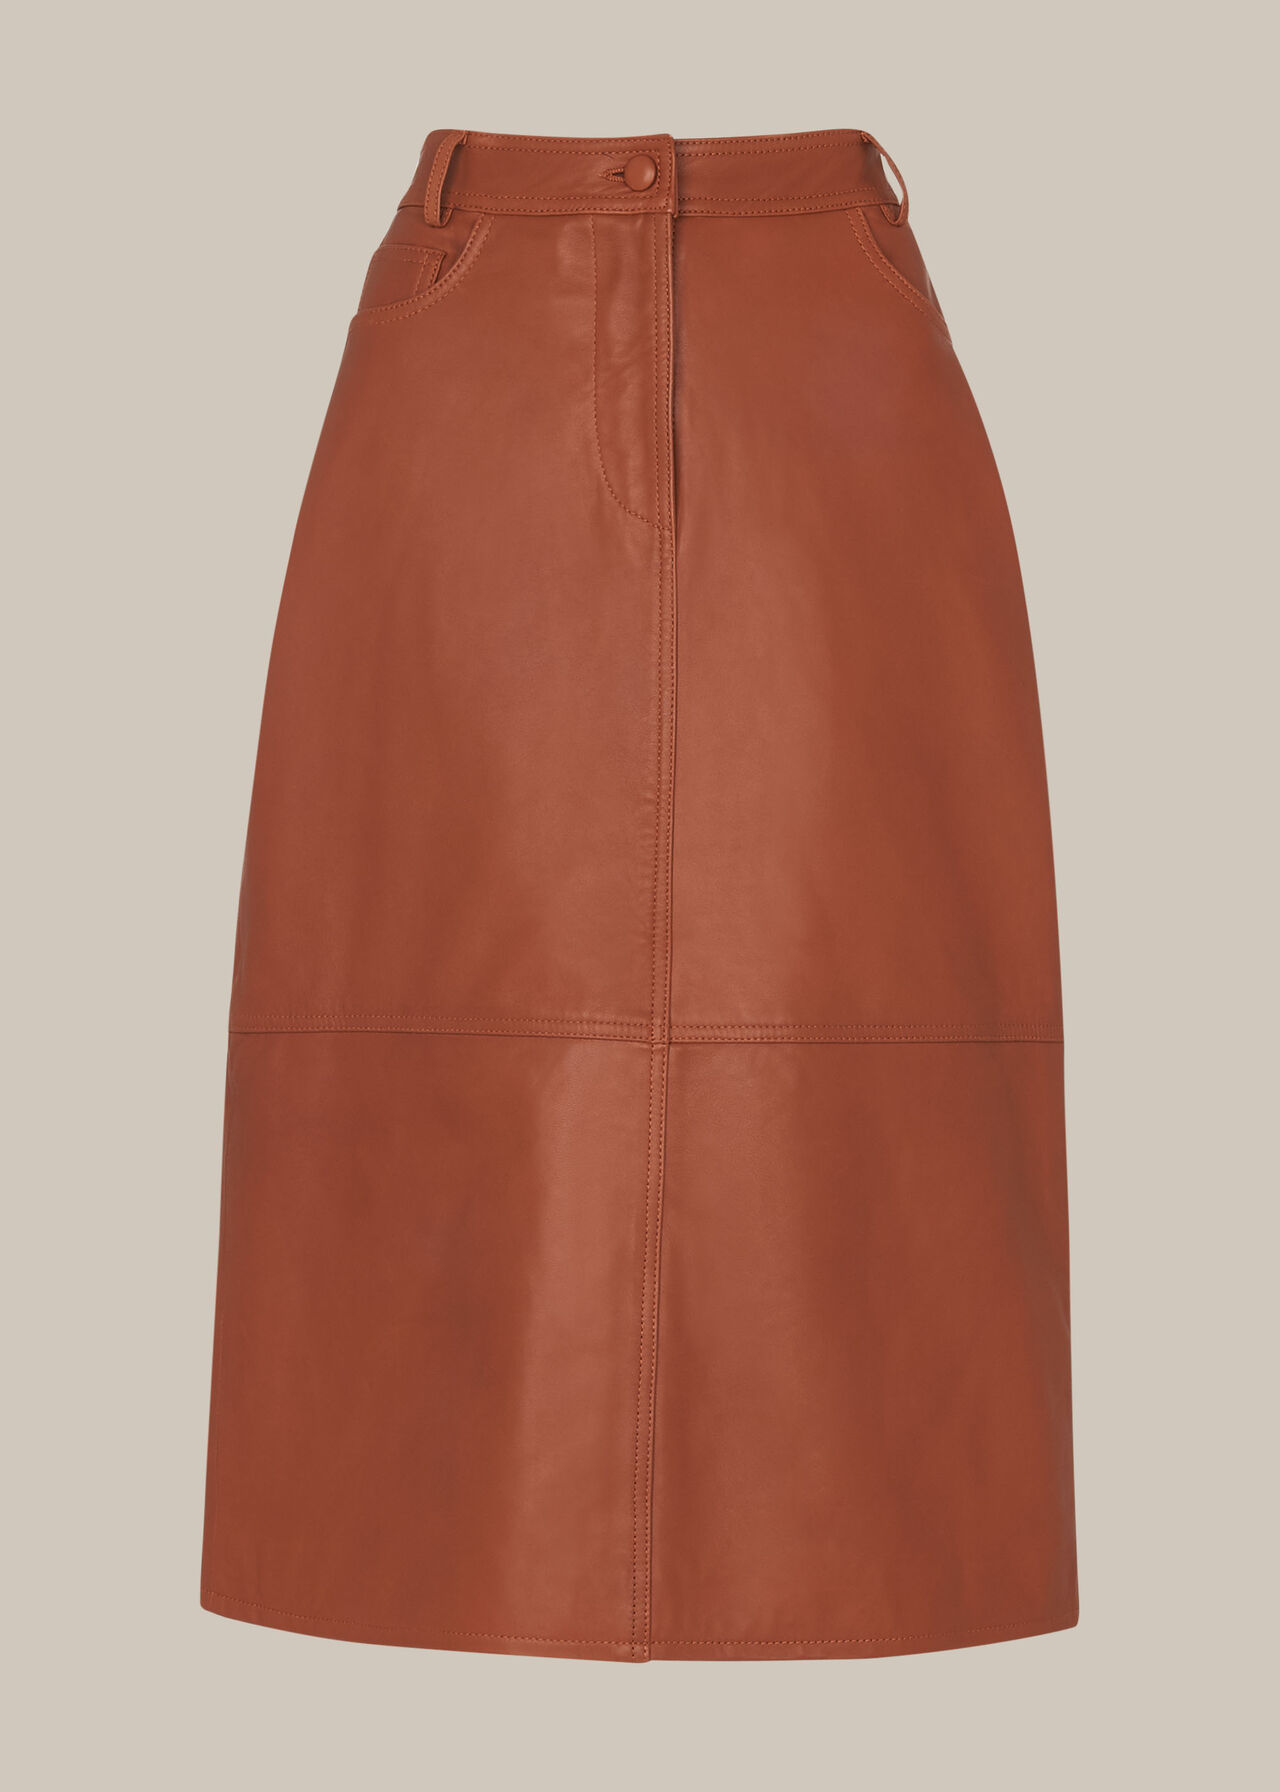 Tan Panelled Leather Skirt | WHISTLES | Whistles UK